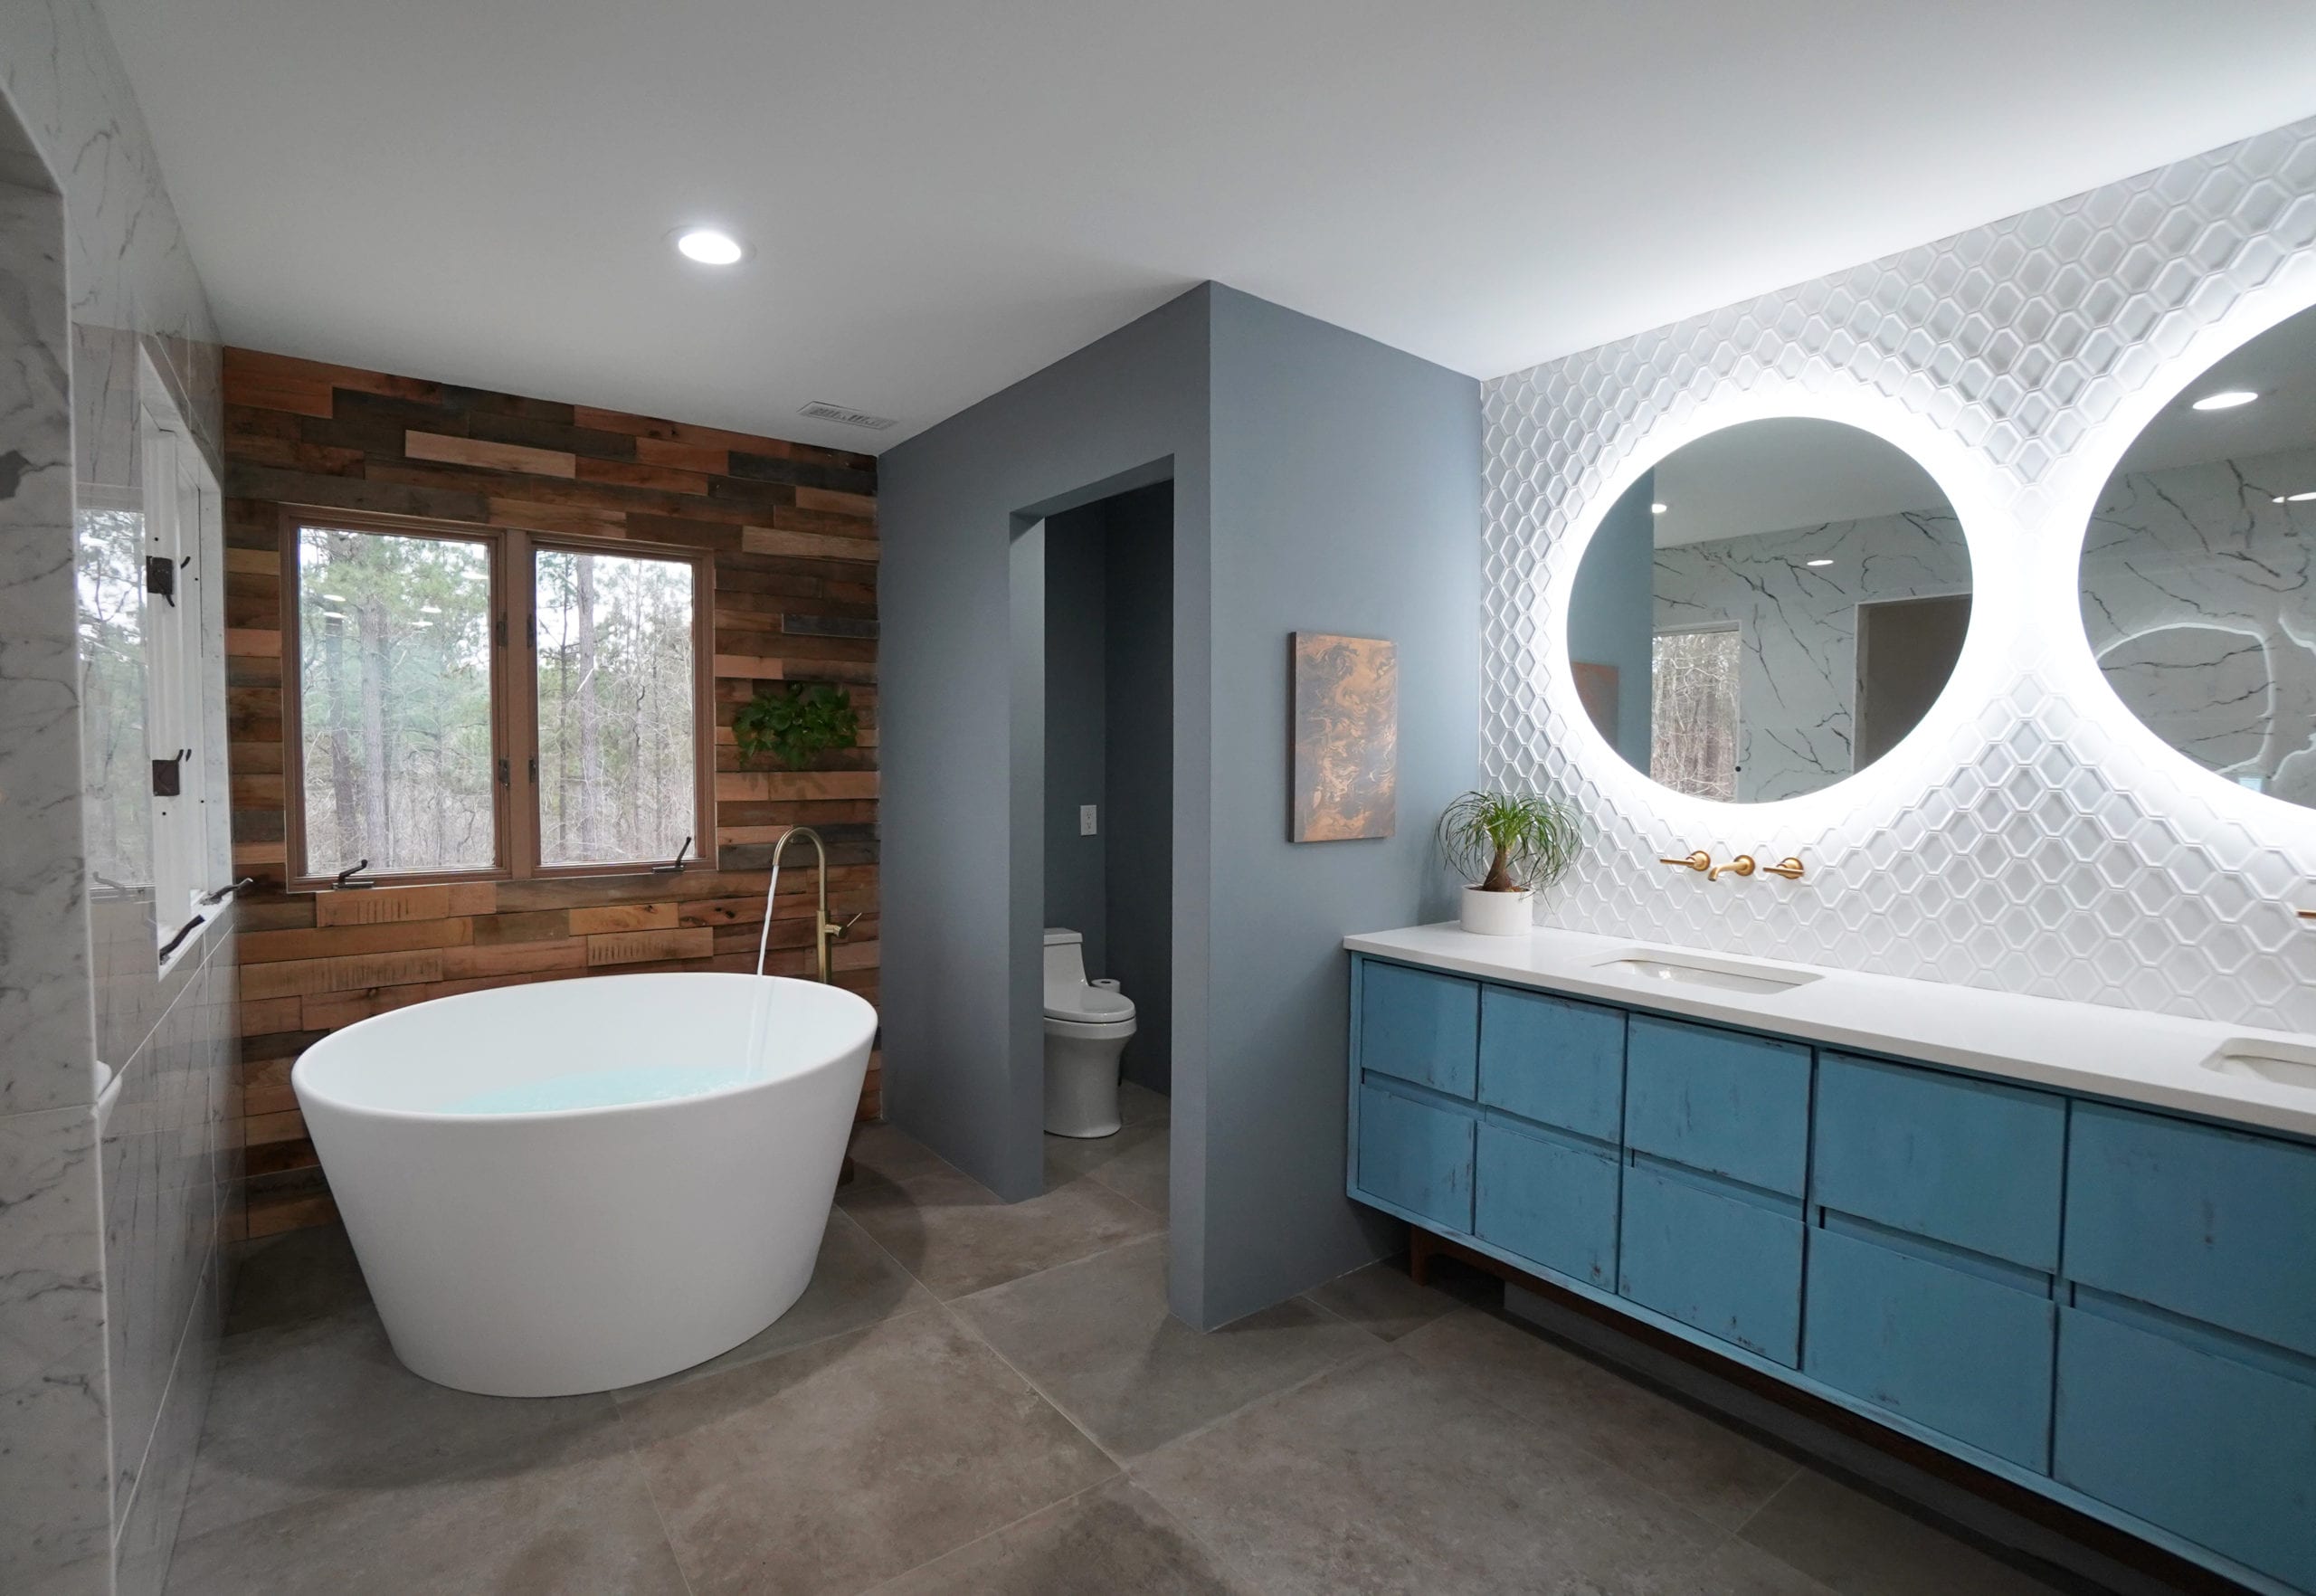 Round tub, bathtub ideas wood wall bathroom plant wall open water closet blue vanity round bathroom mirrors round mirrors medicine cabinet ideas